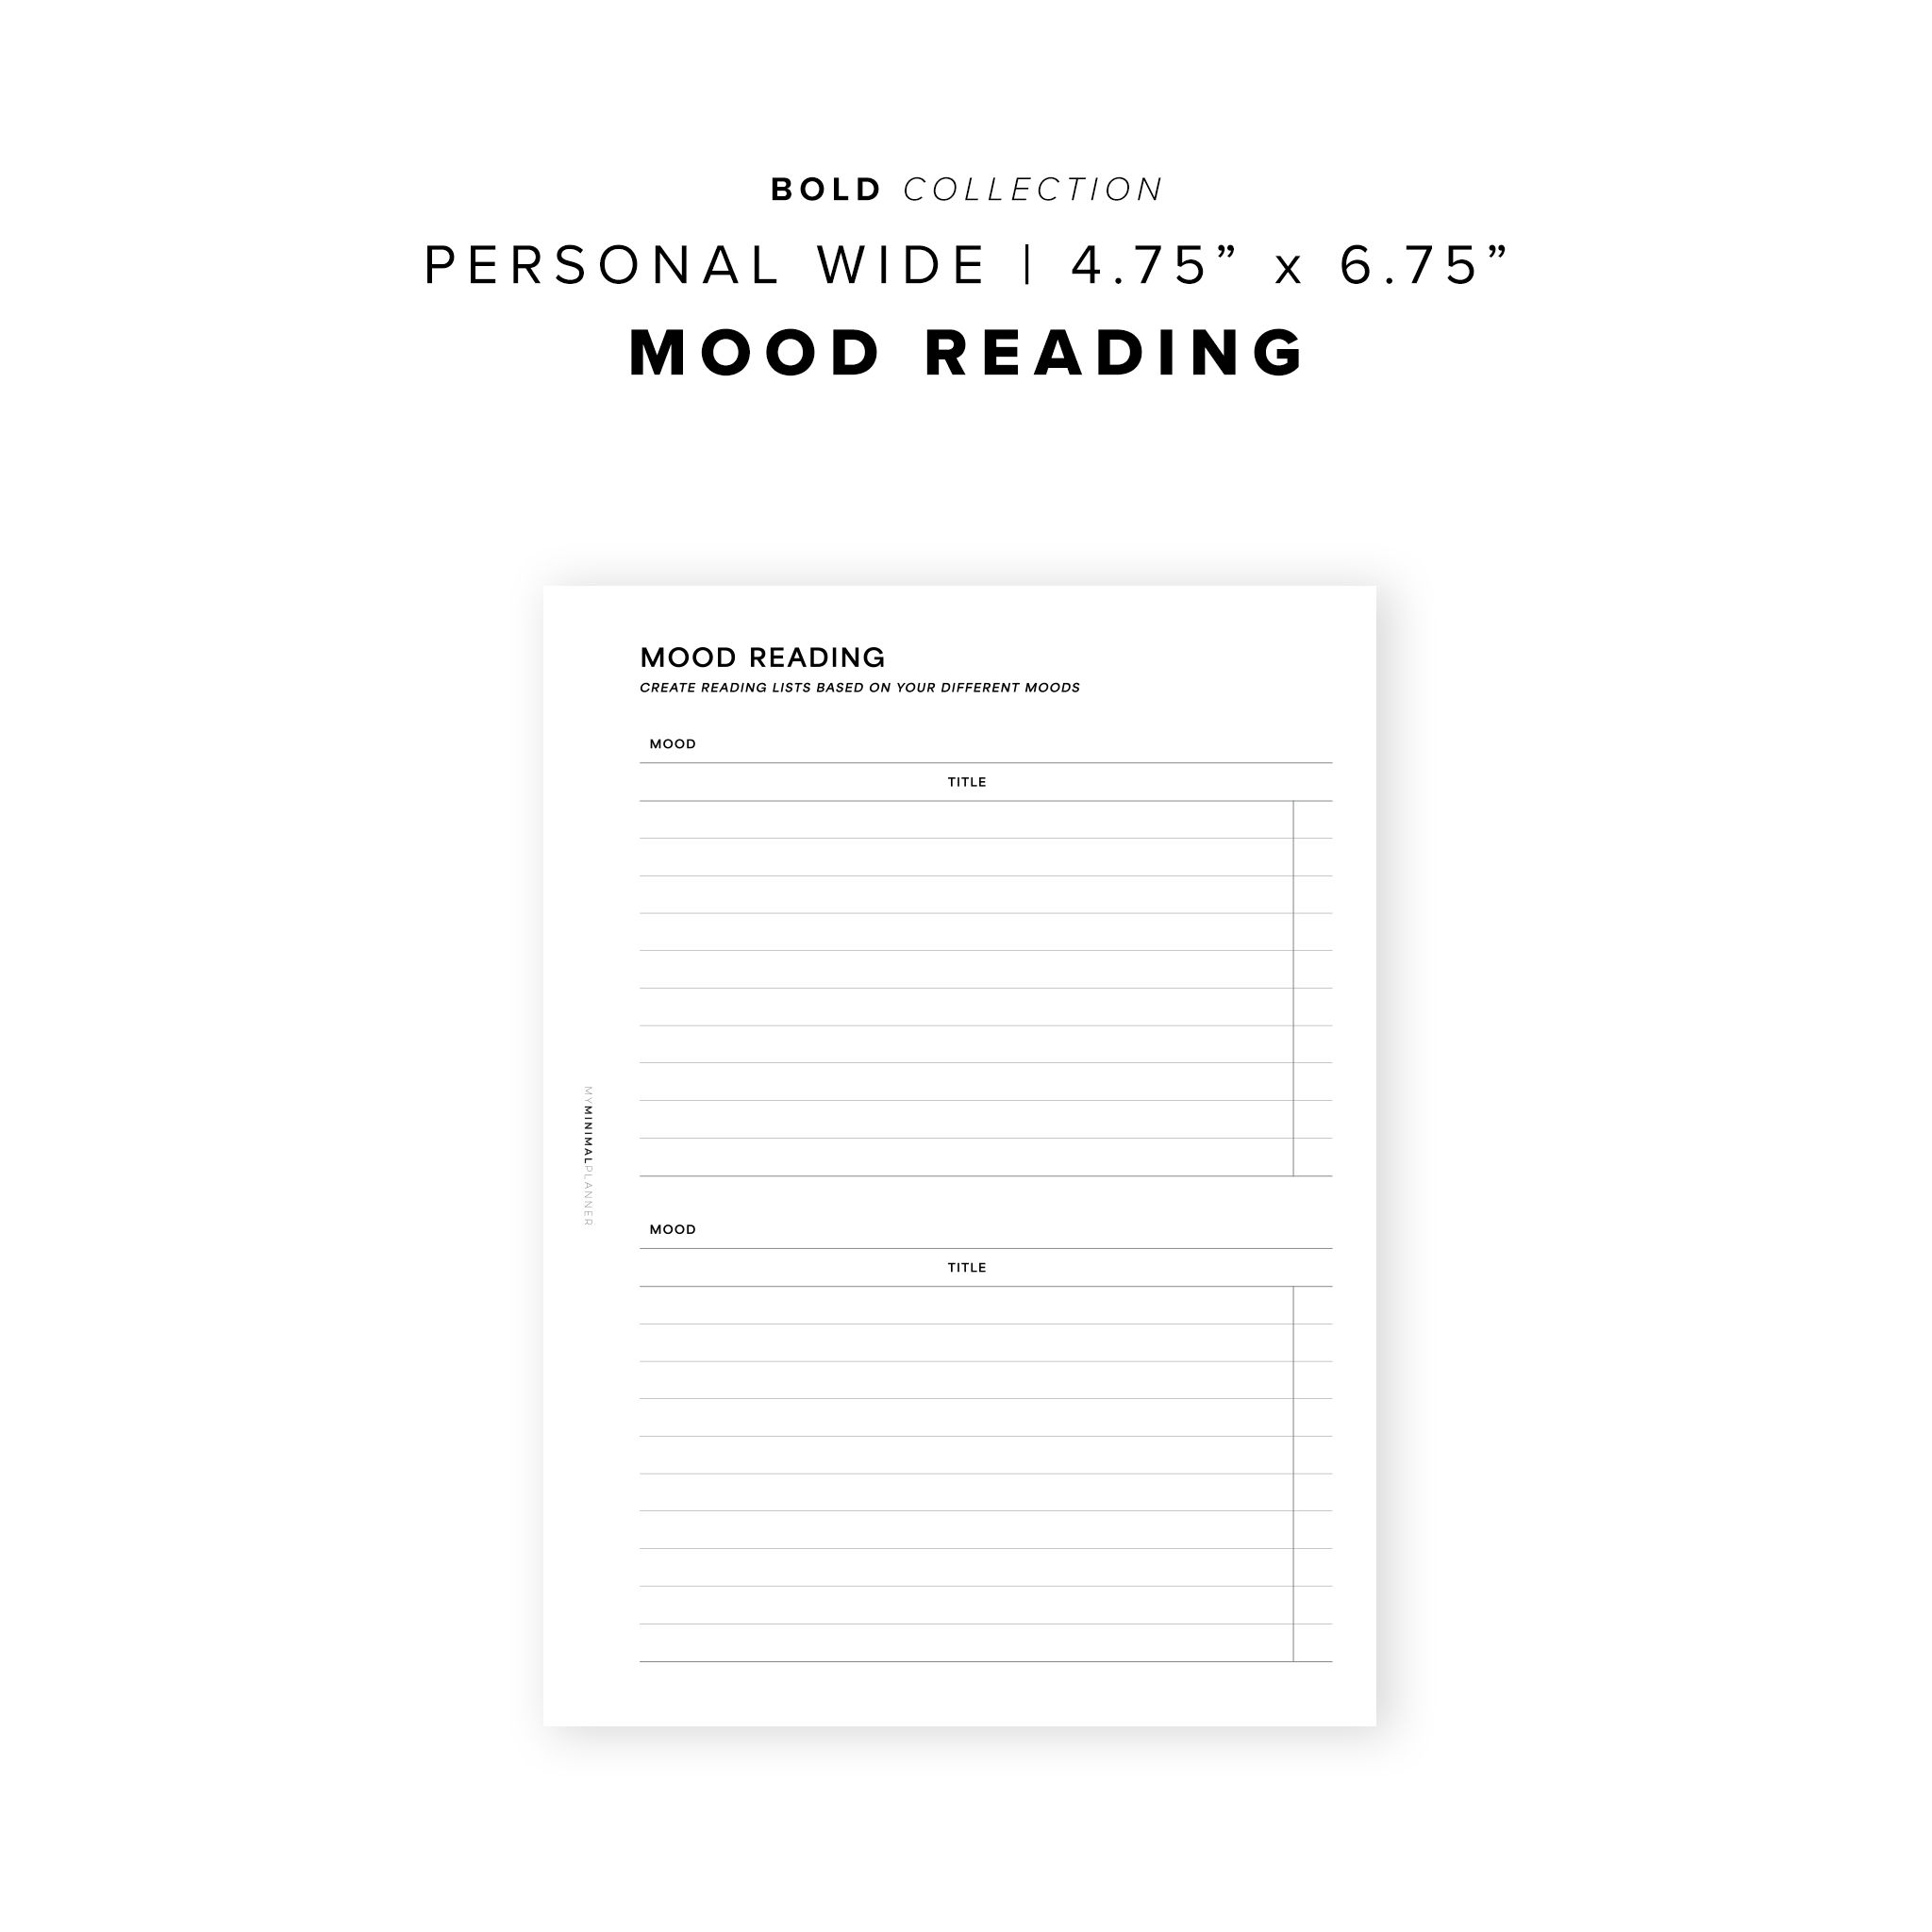 PR193 - Mood Reading - Printable Insert